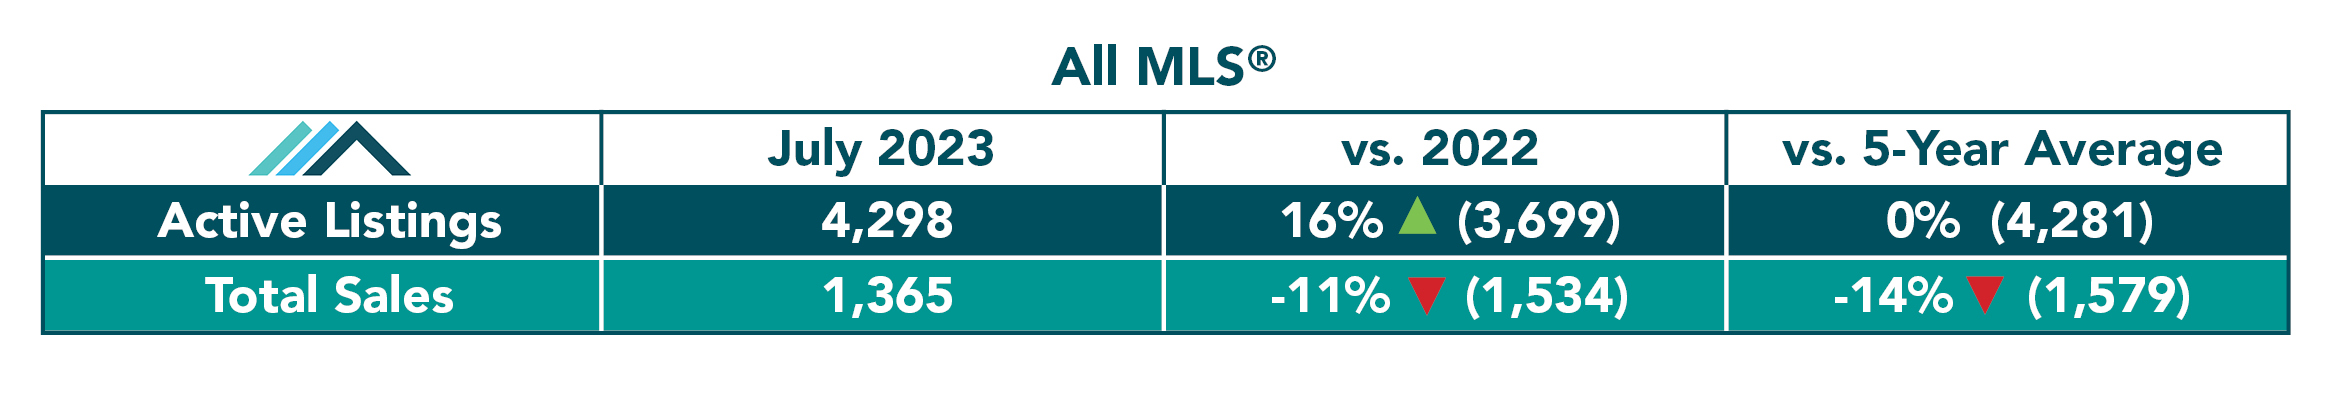 All MLS Table July 2023.jpg (316 KB)